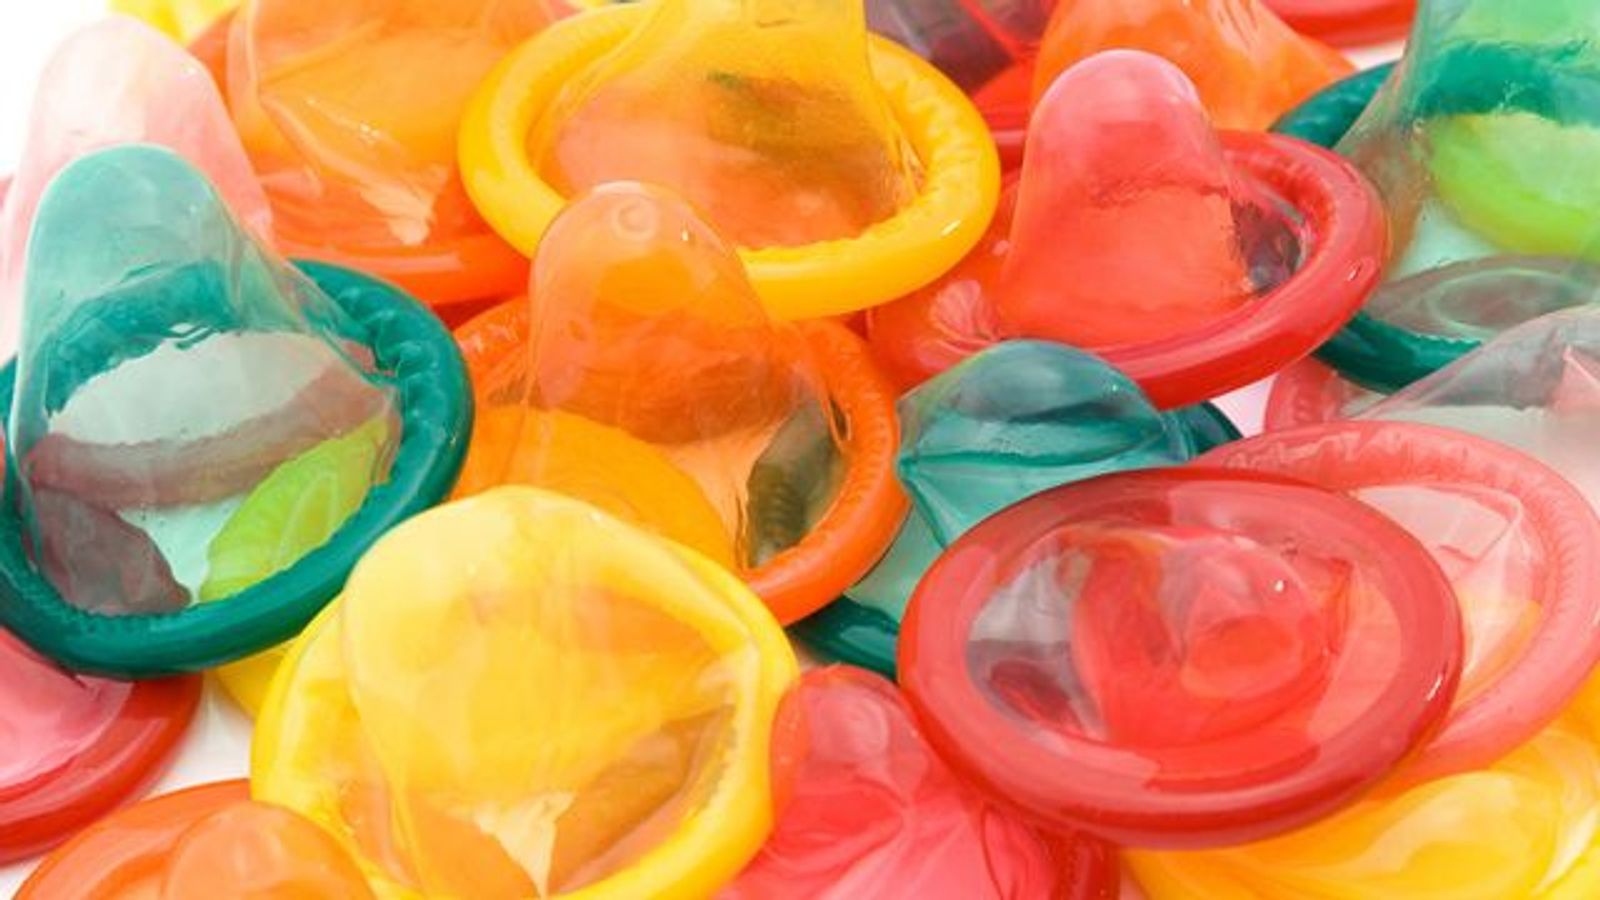 Catholic Doctrine On Condoms Reaches Mid-20th Century